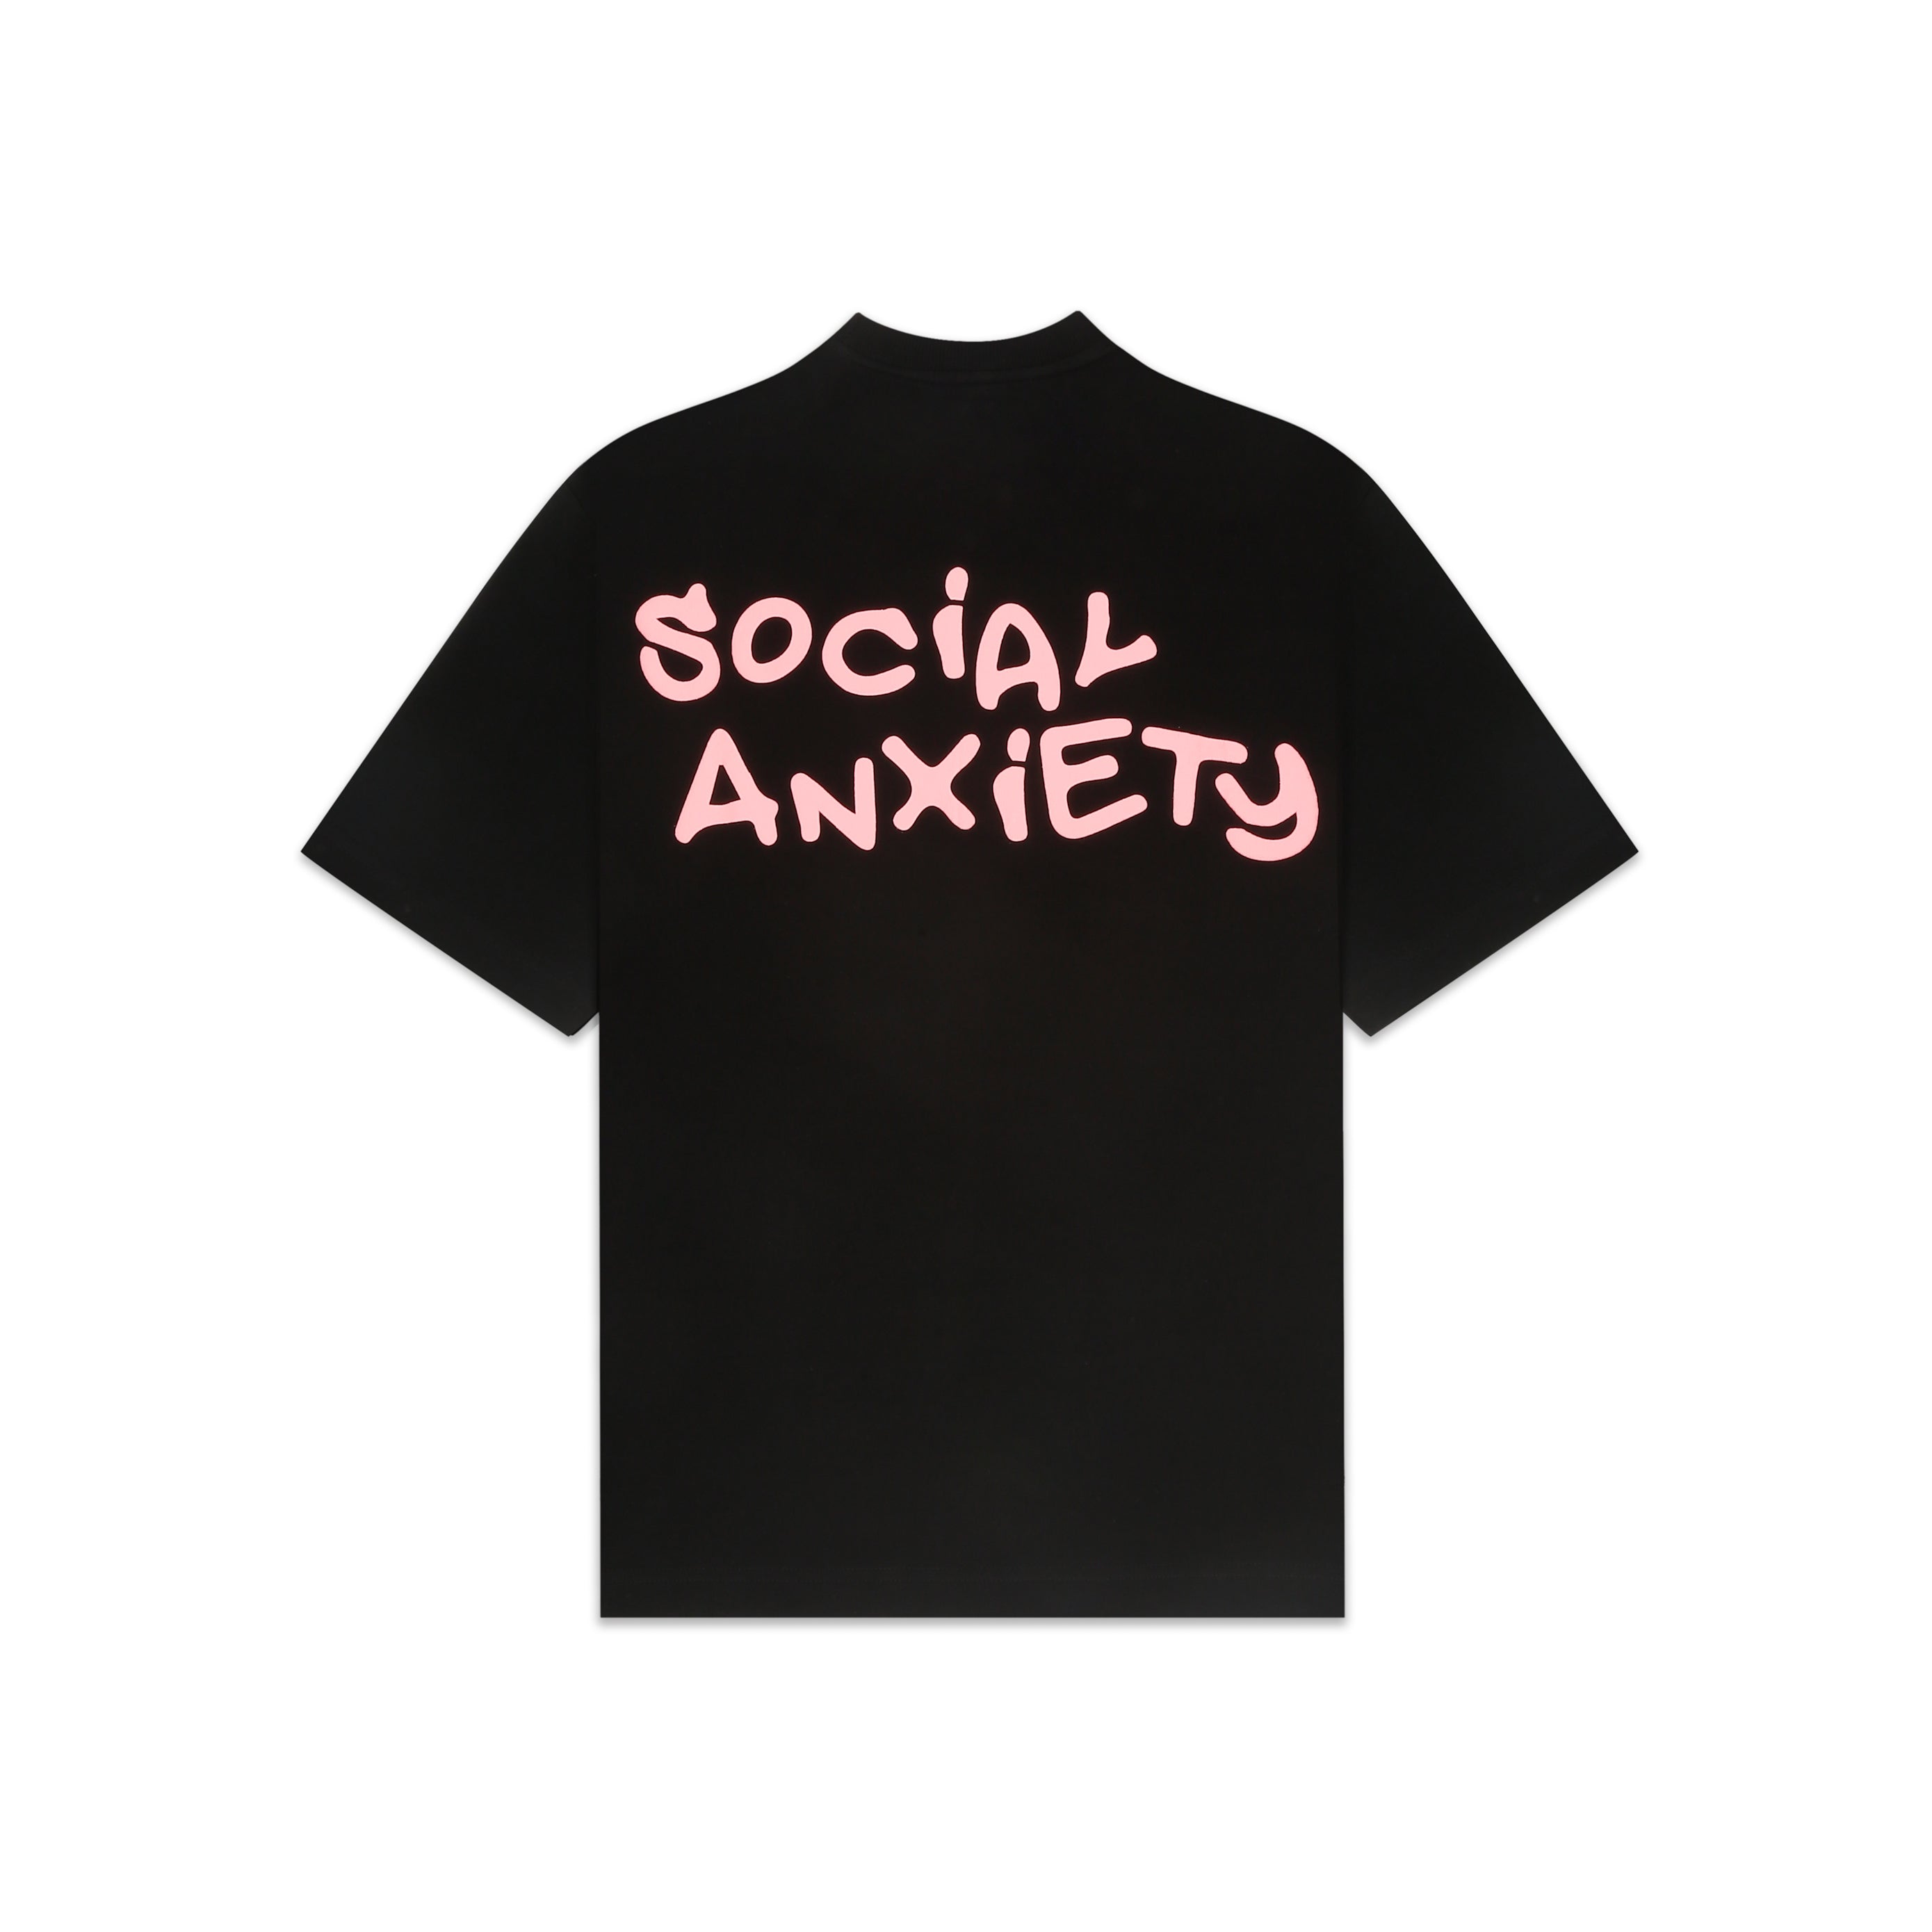 TOO SOBER & SOCIAL ANXIETY BLACK T-SHIRT